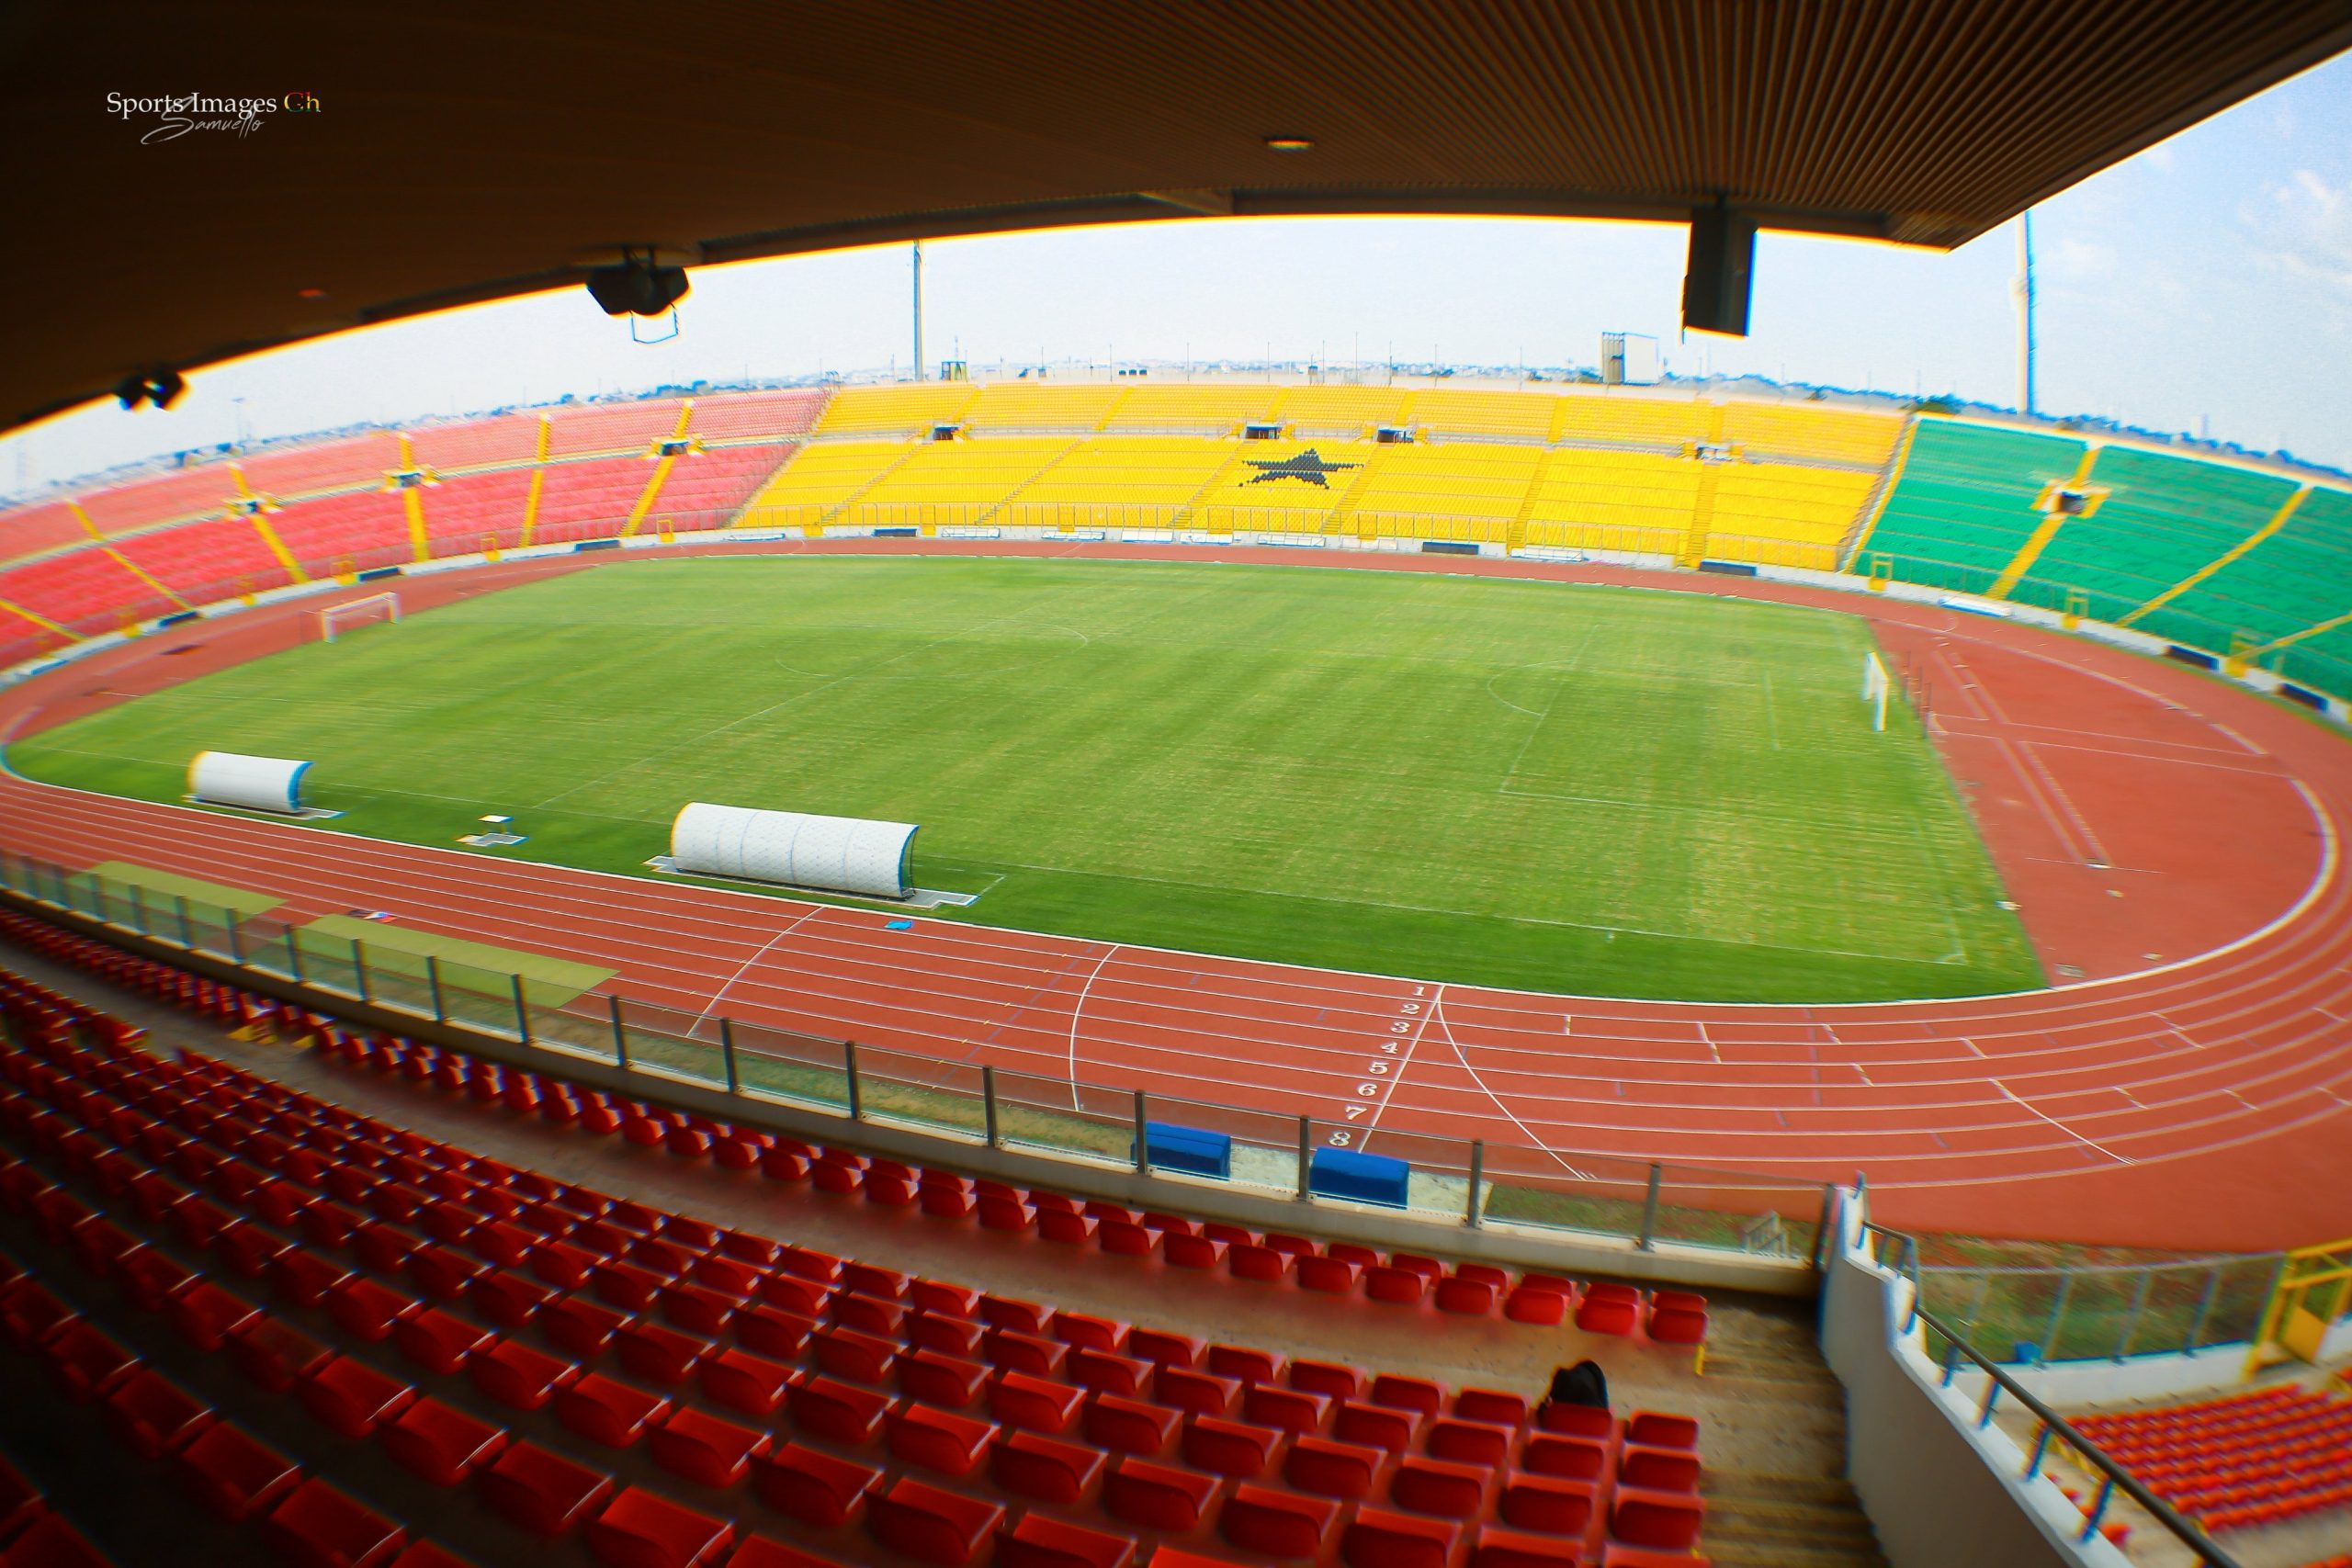 Baba Yara Sports stadium to host Ghana vs. Madagascar World Cup qualifier